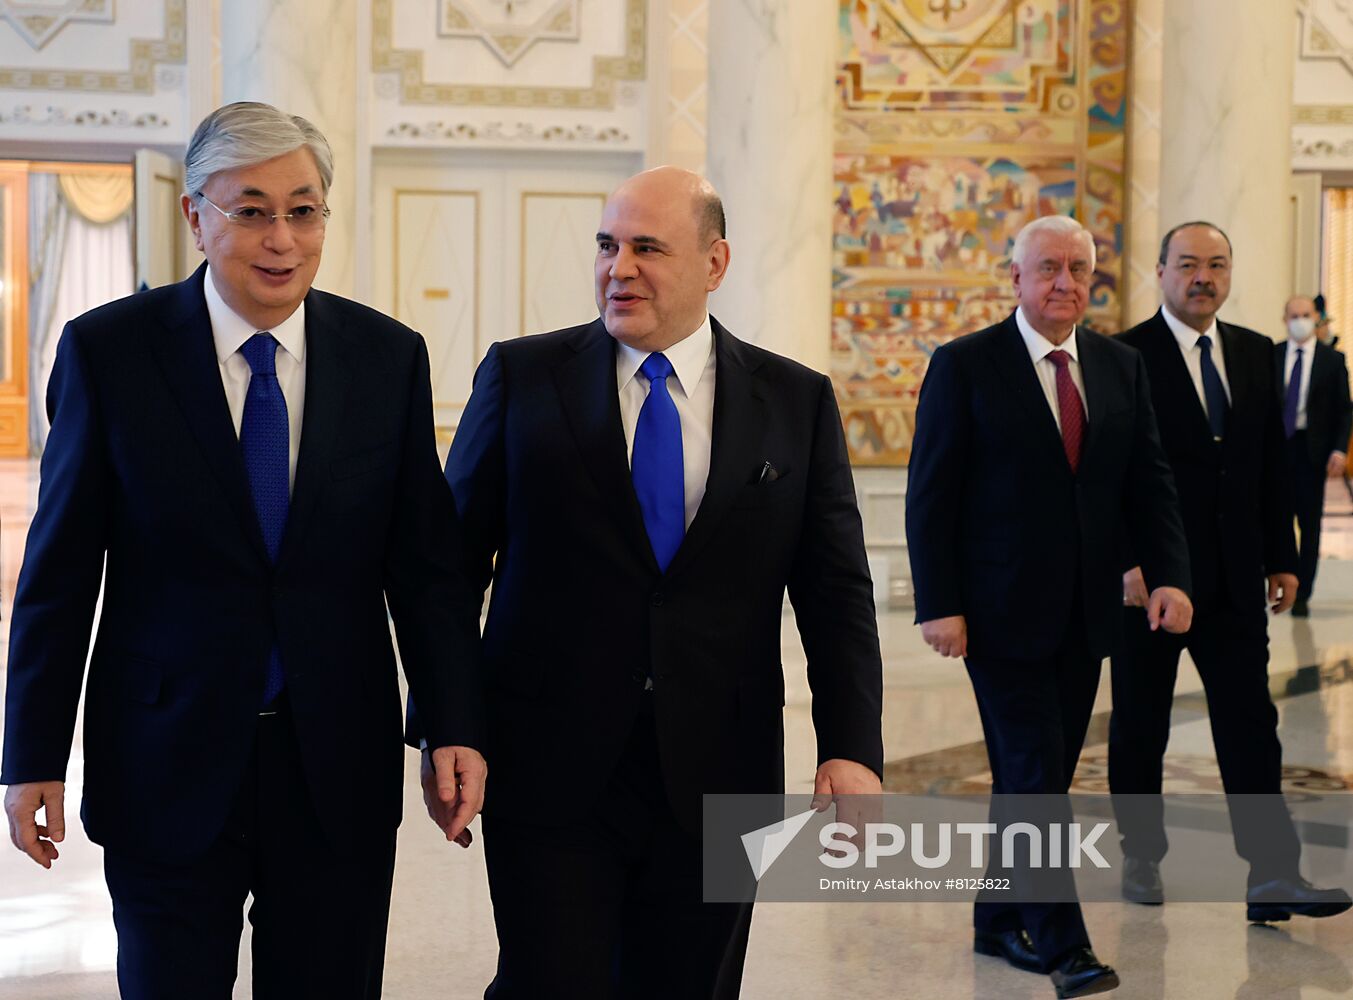 Kazakhstan EAEU Intergovernmental Council